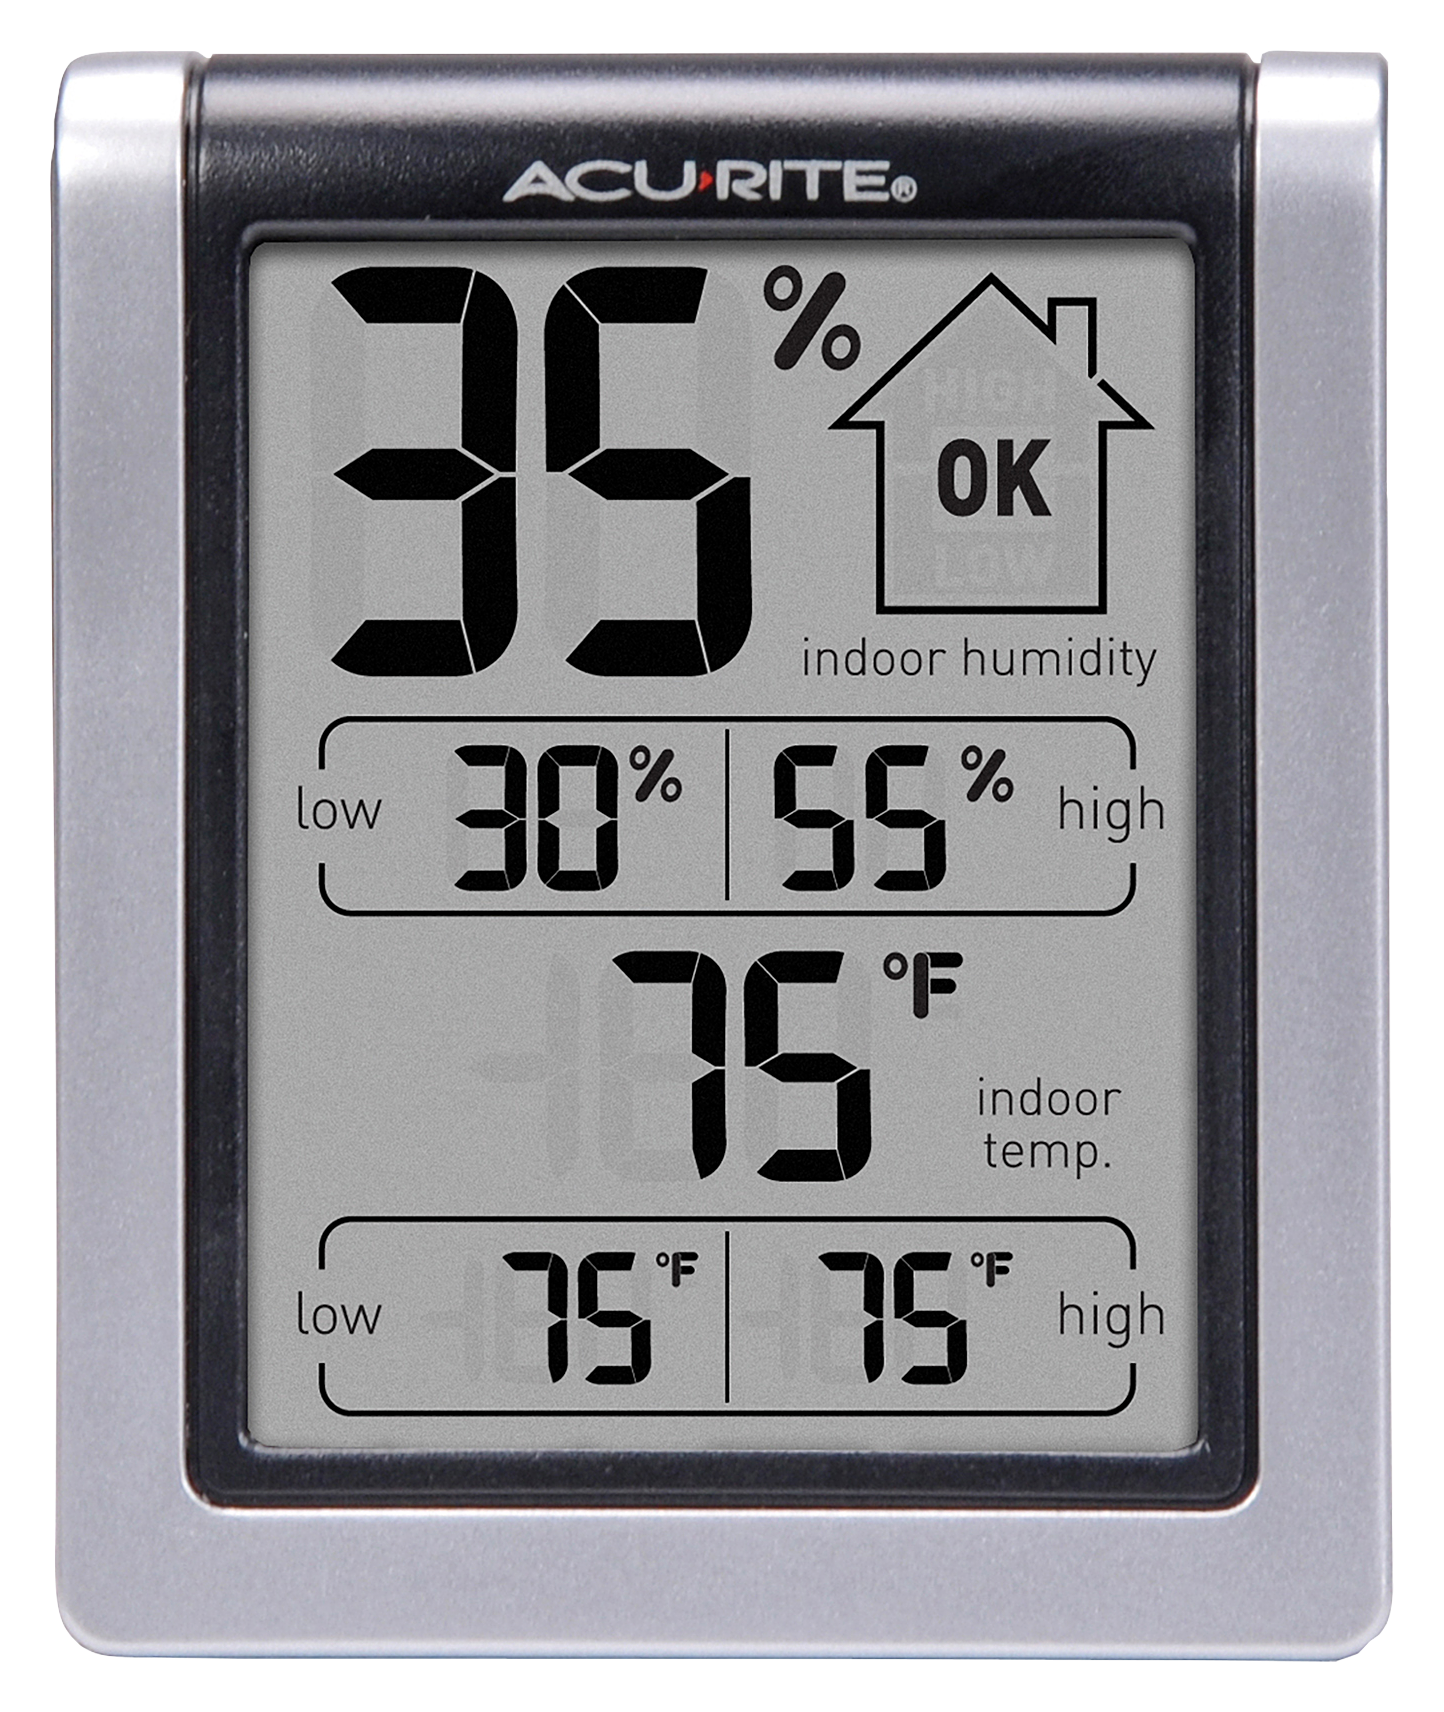 AcuRite 3"" Digital Humidity and Temperature Comfort Monitor